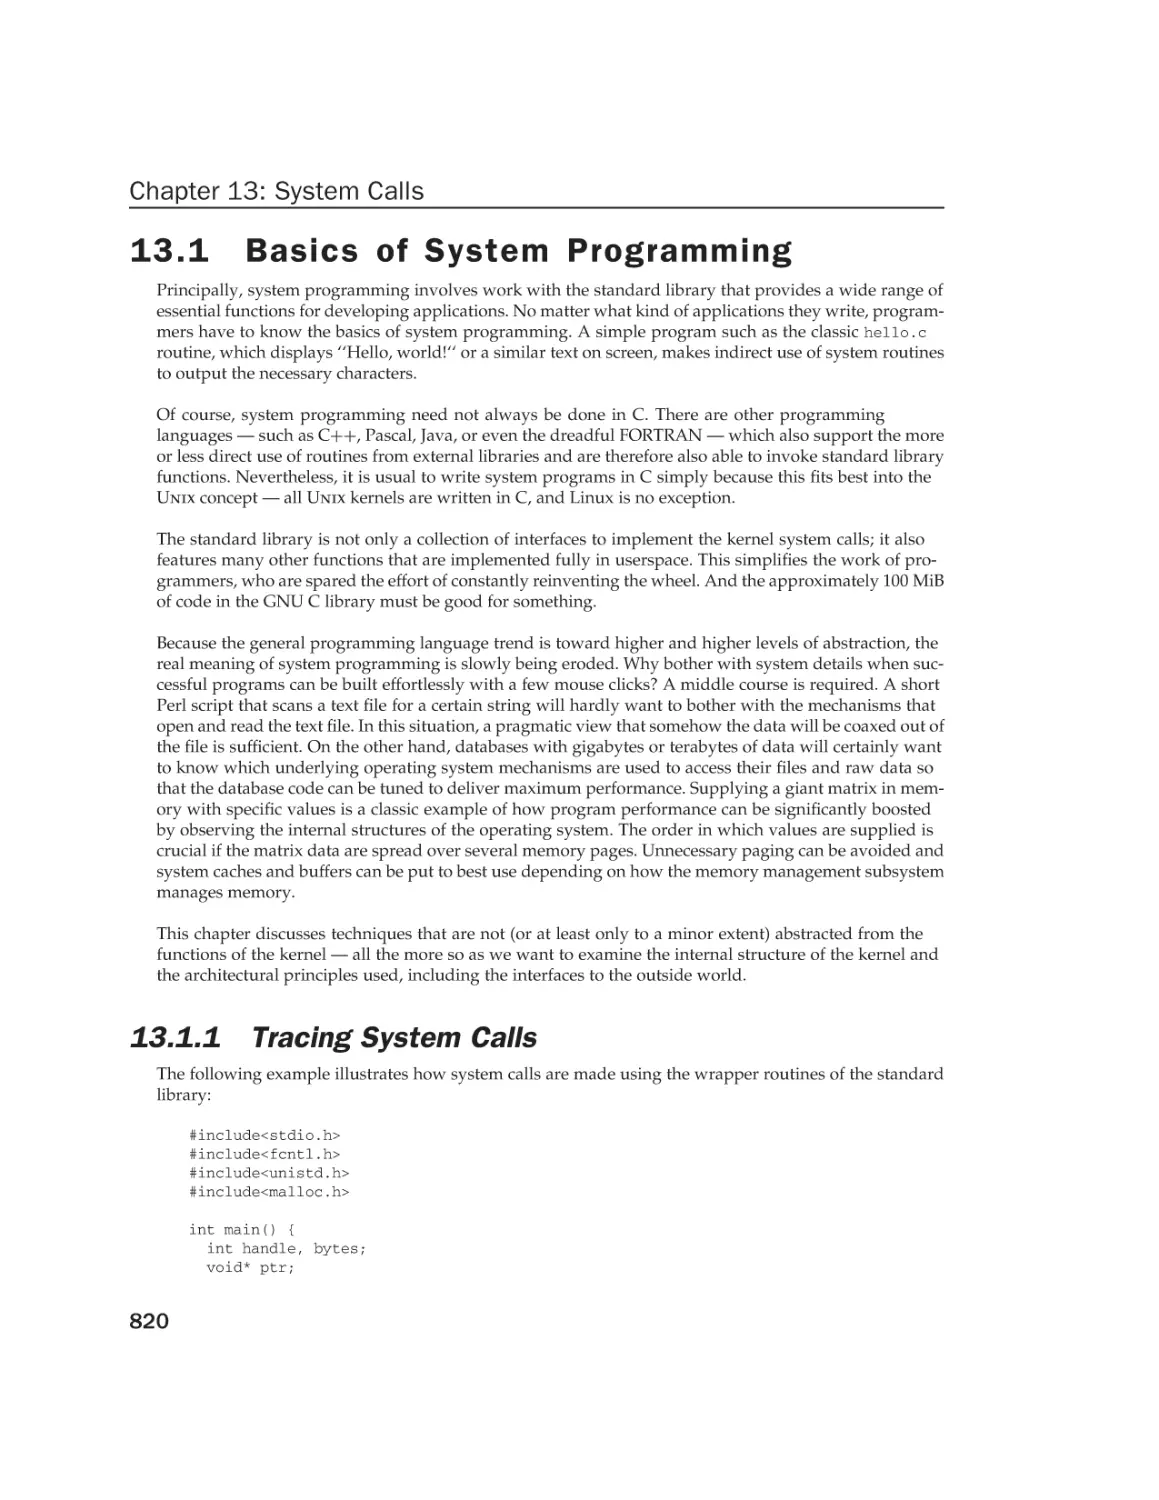 13.1 Basics of System Programming